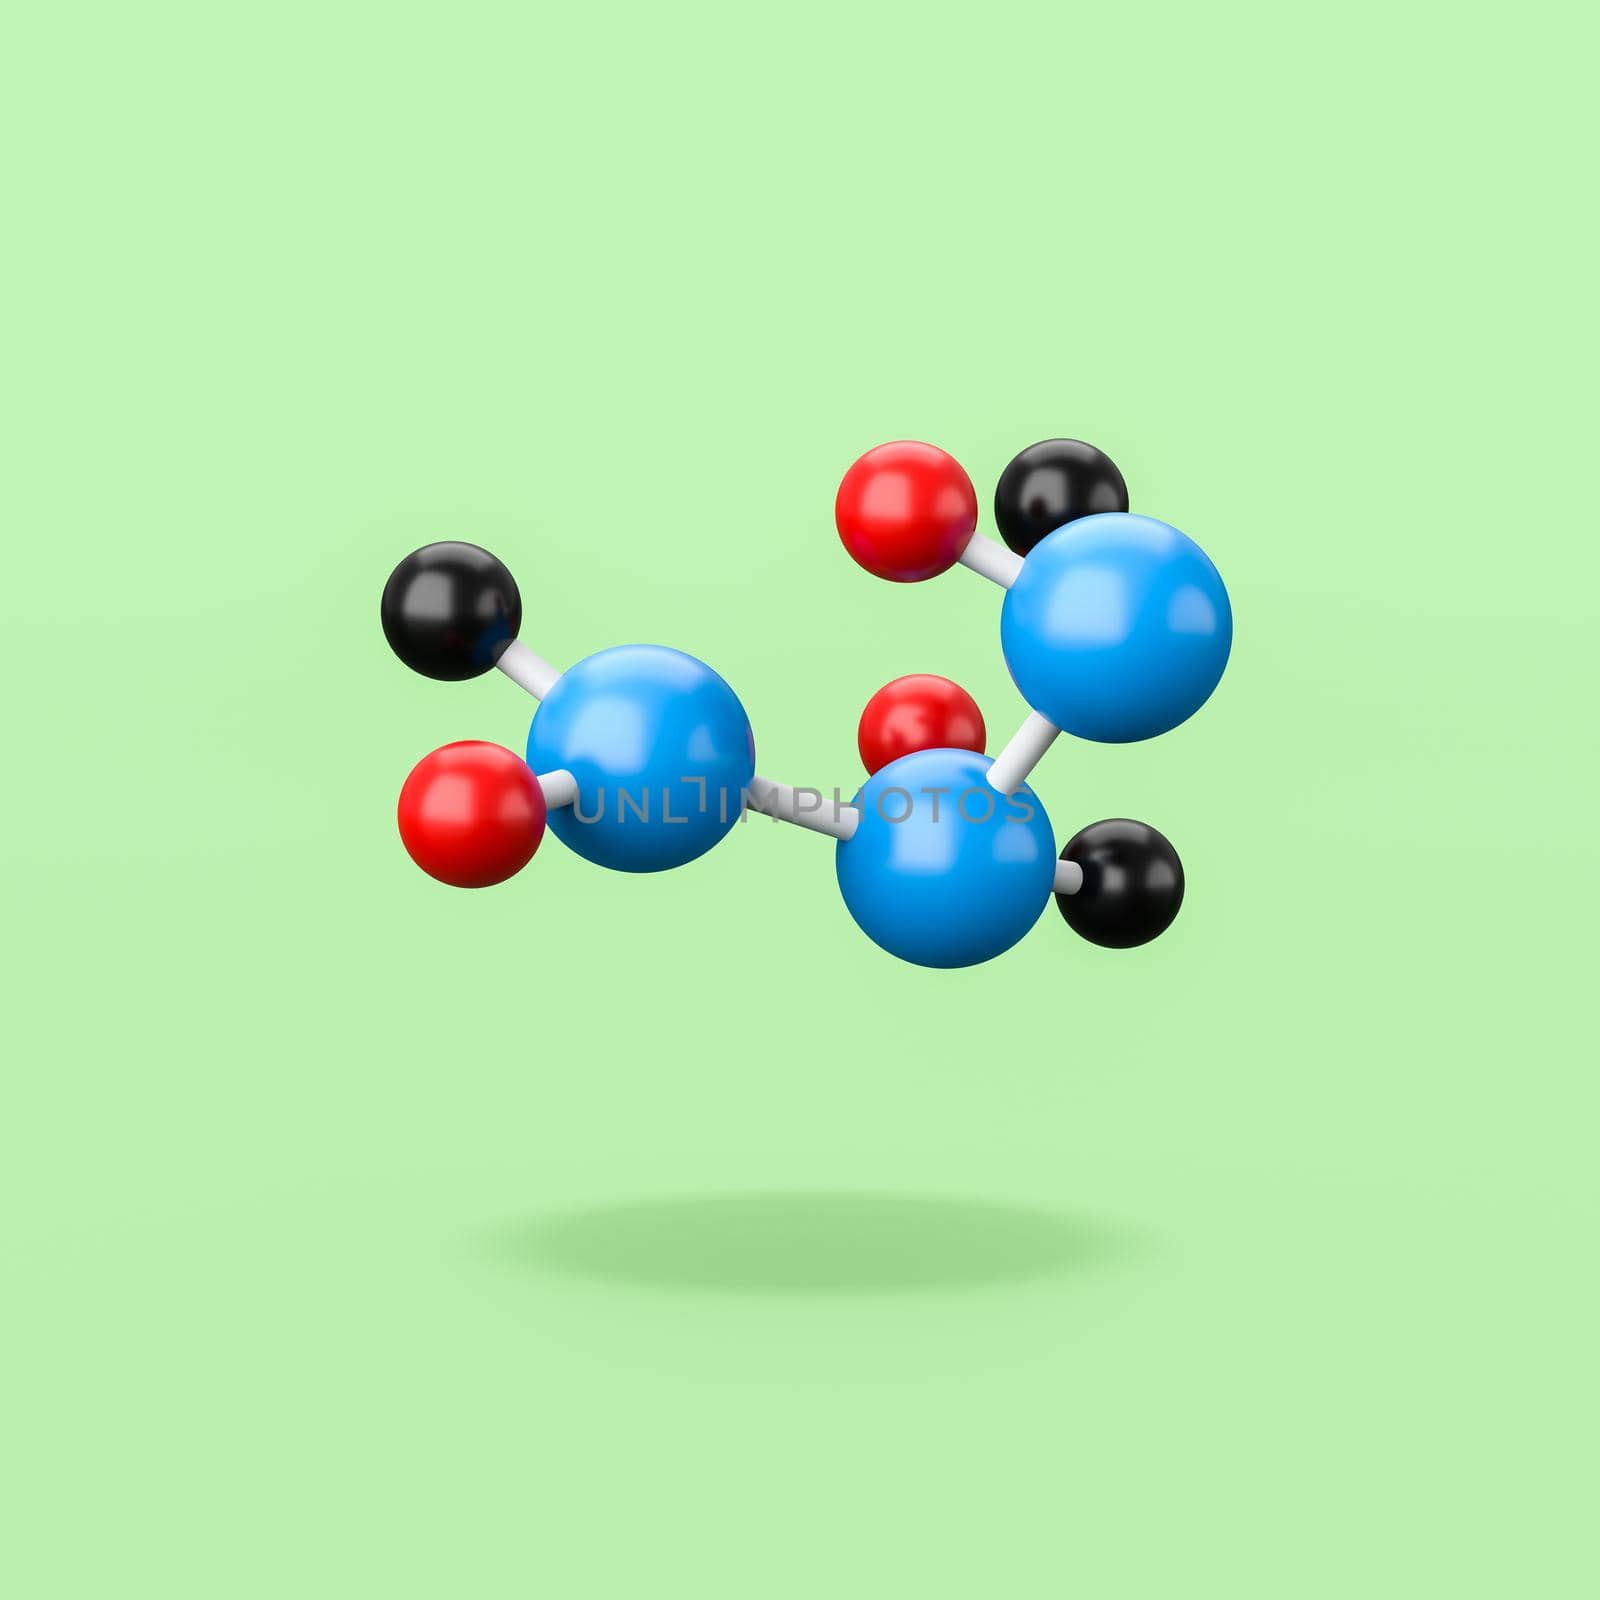 Molecule Shape on Green Background by make